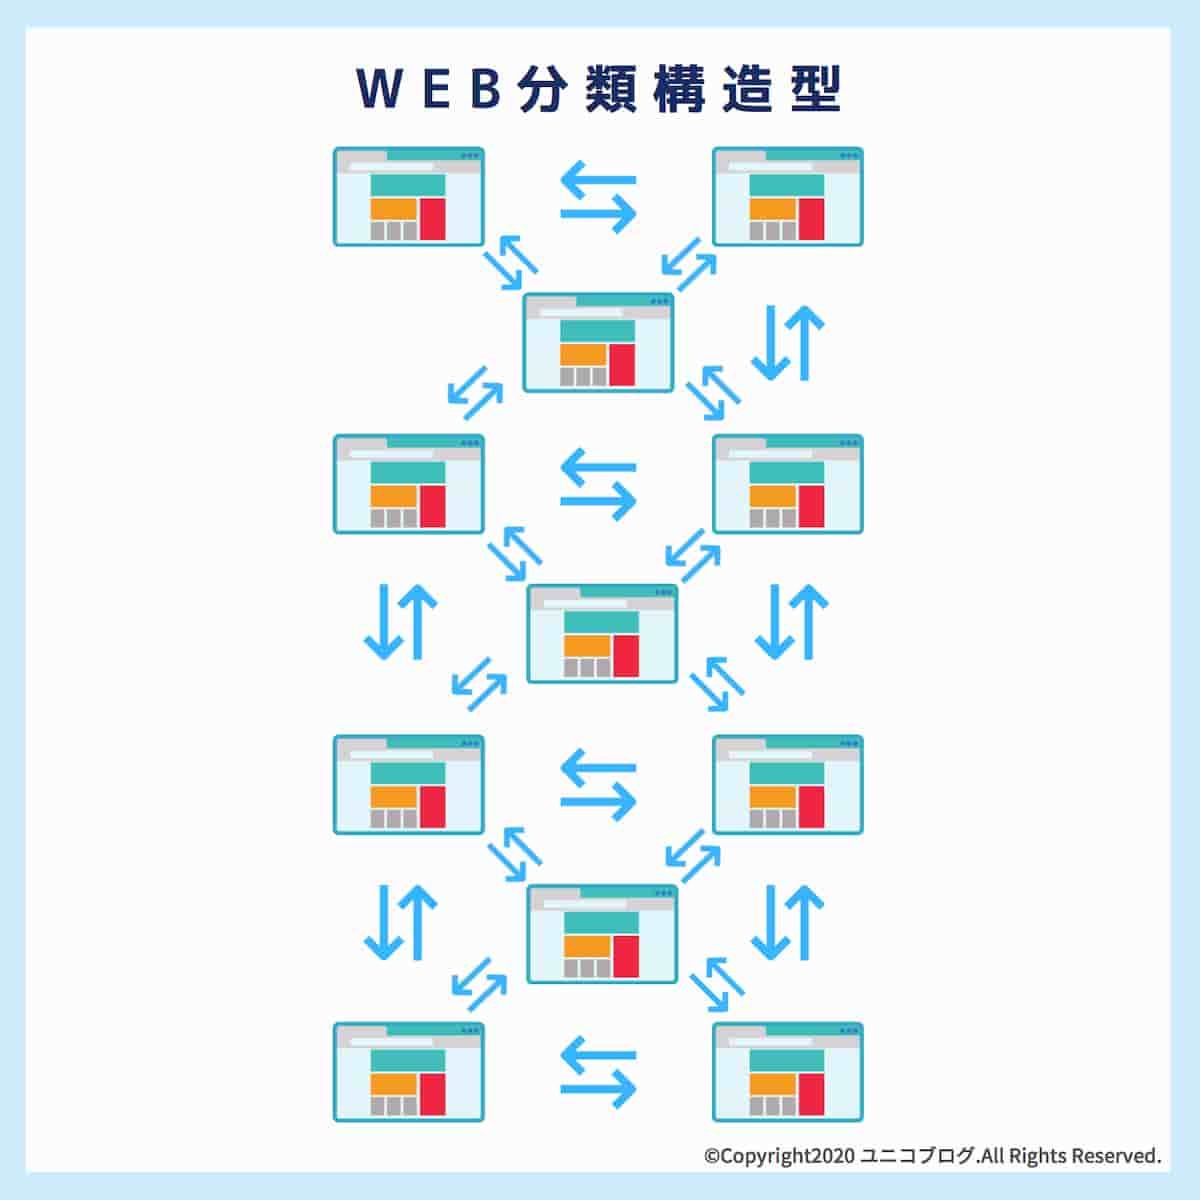 Web分類構造型のWebサイトを説明した設計図面画像